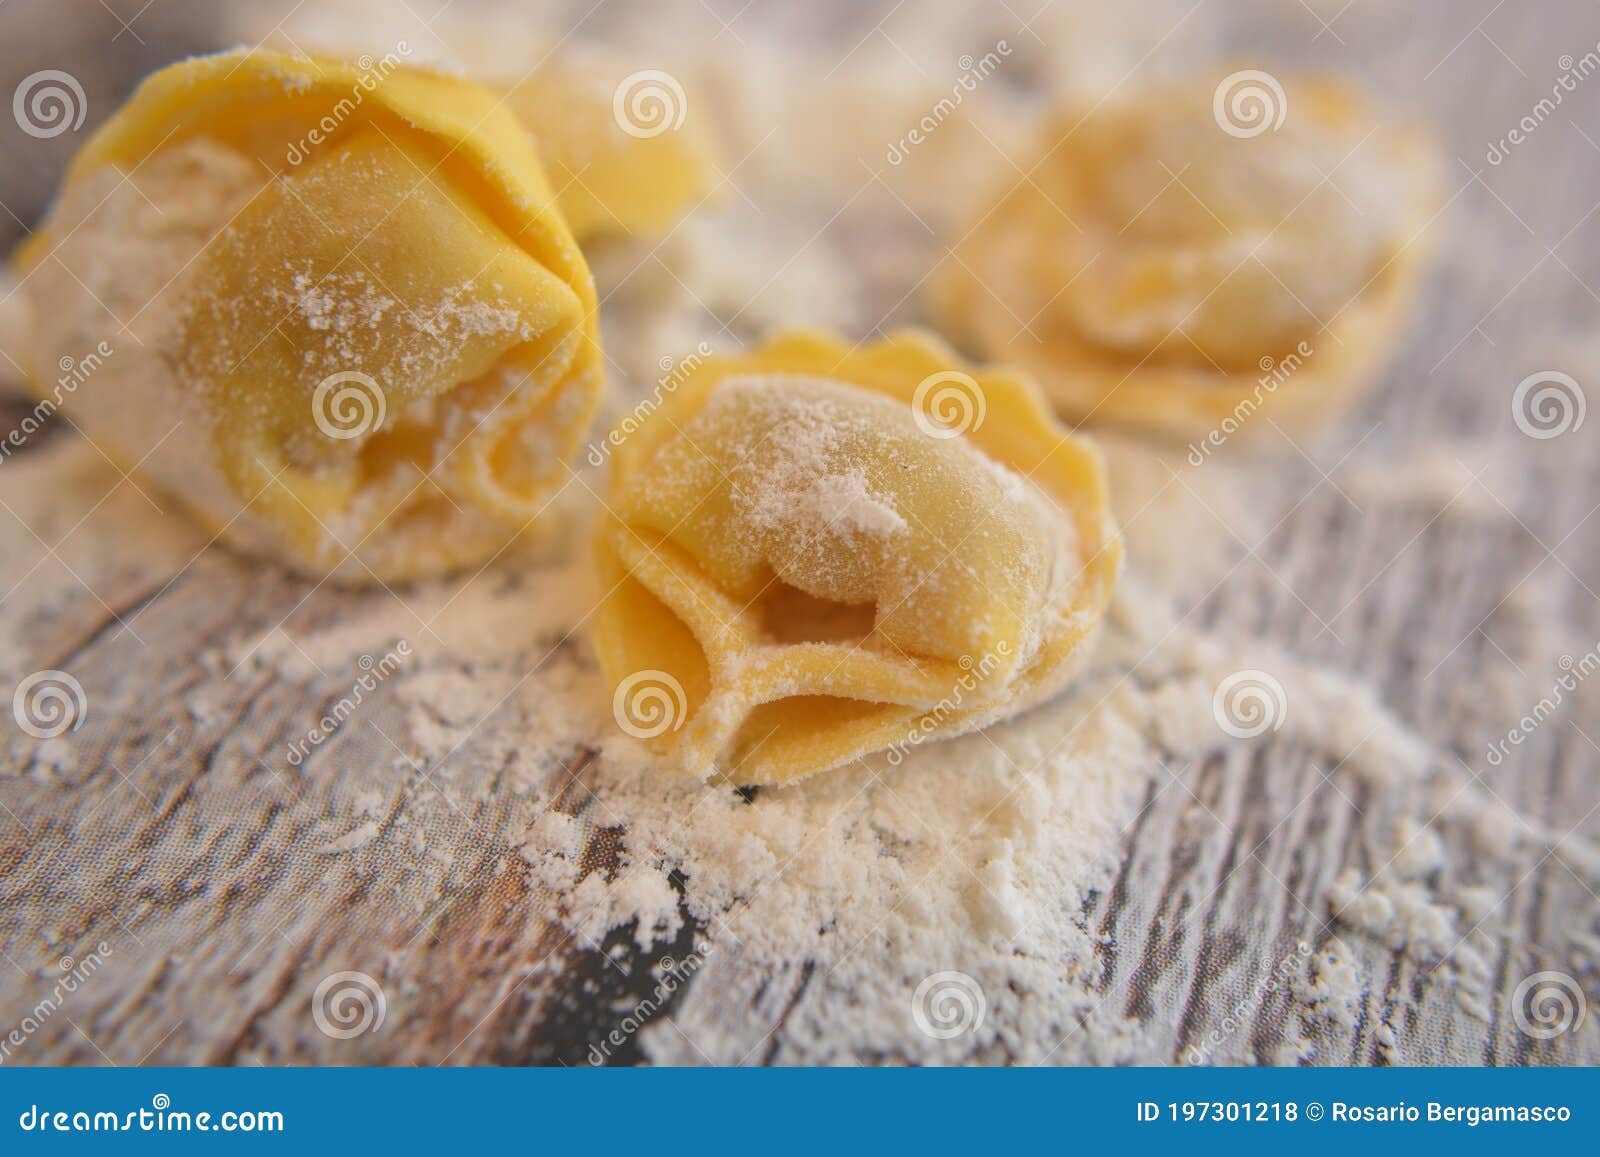 italian tortellini traditional pasta with eggs